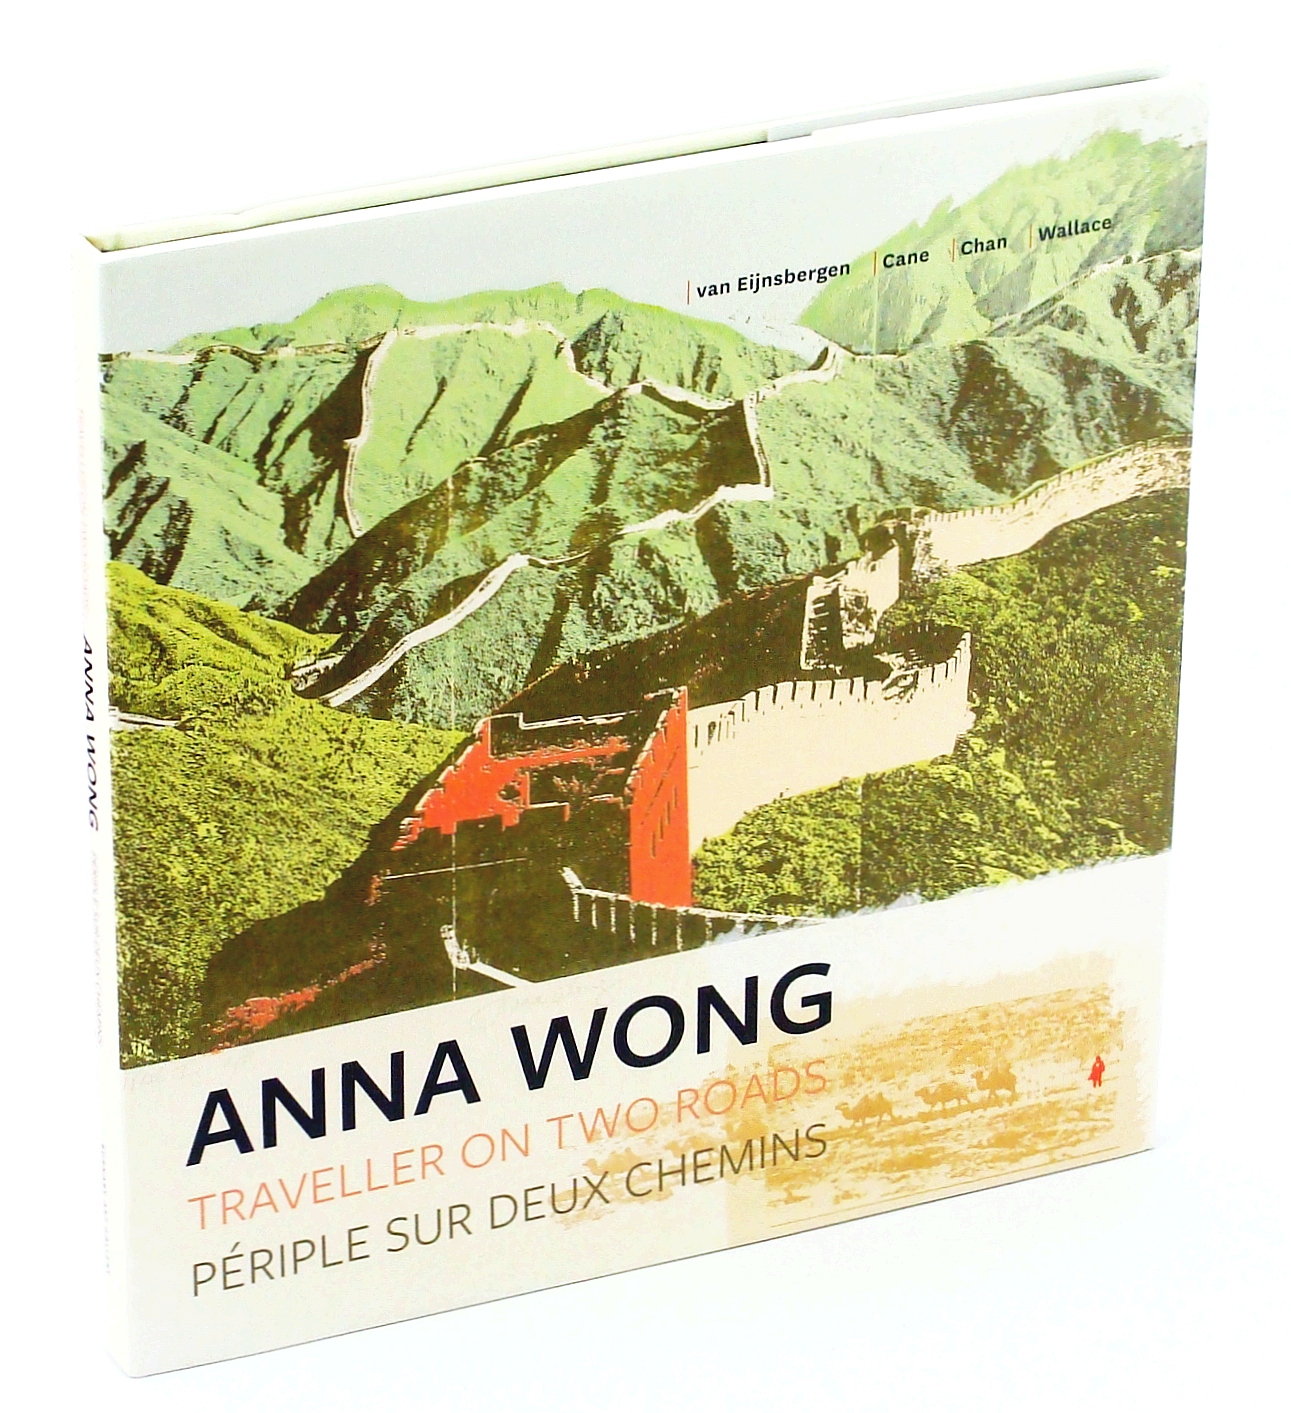 Image for Anna Wong - Traveller on Two Roads / Périple Sur Deux Chemins